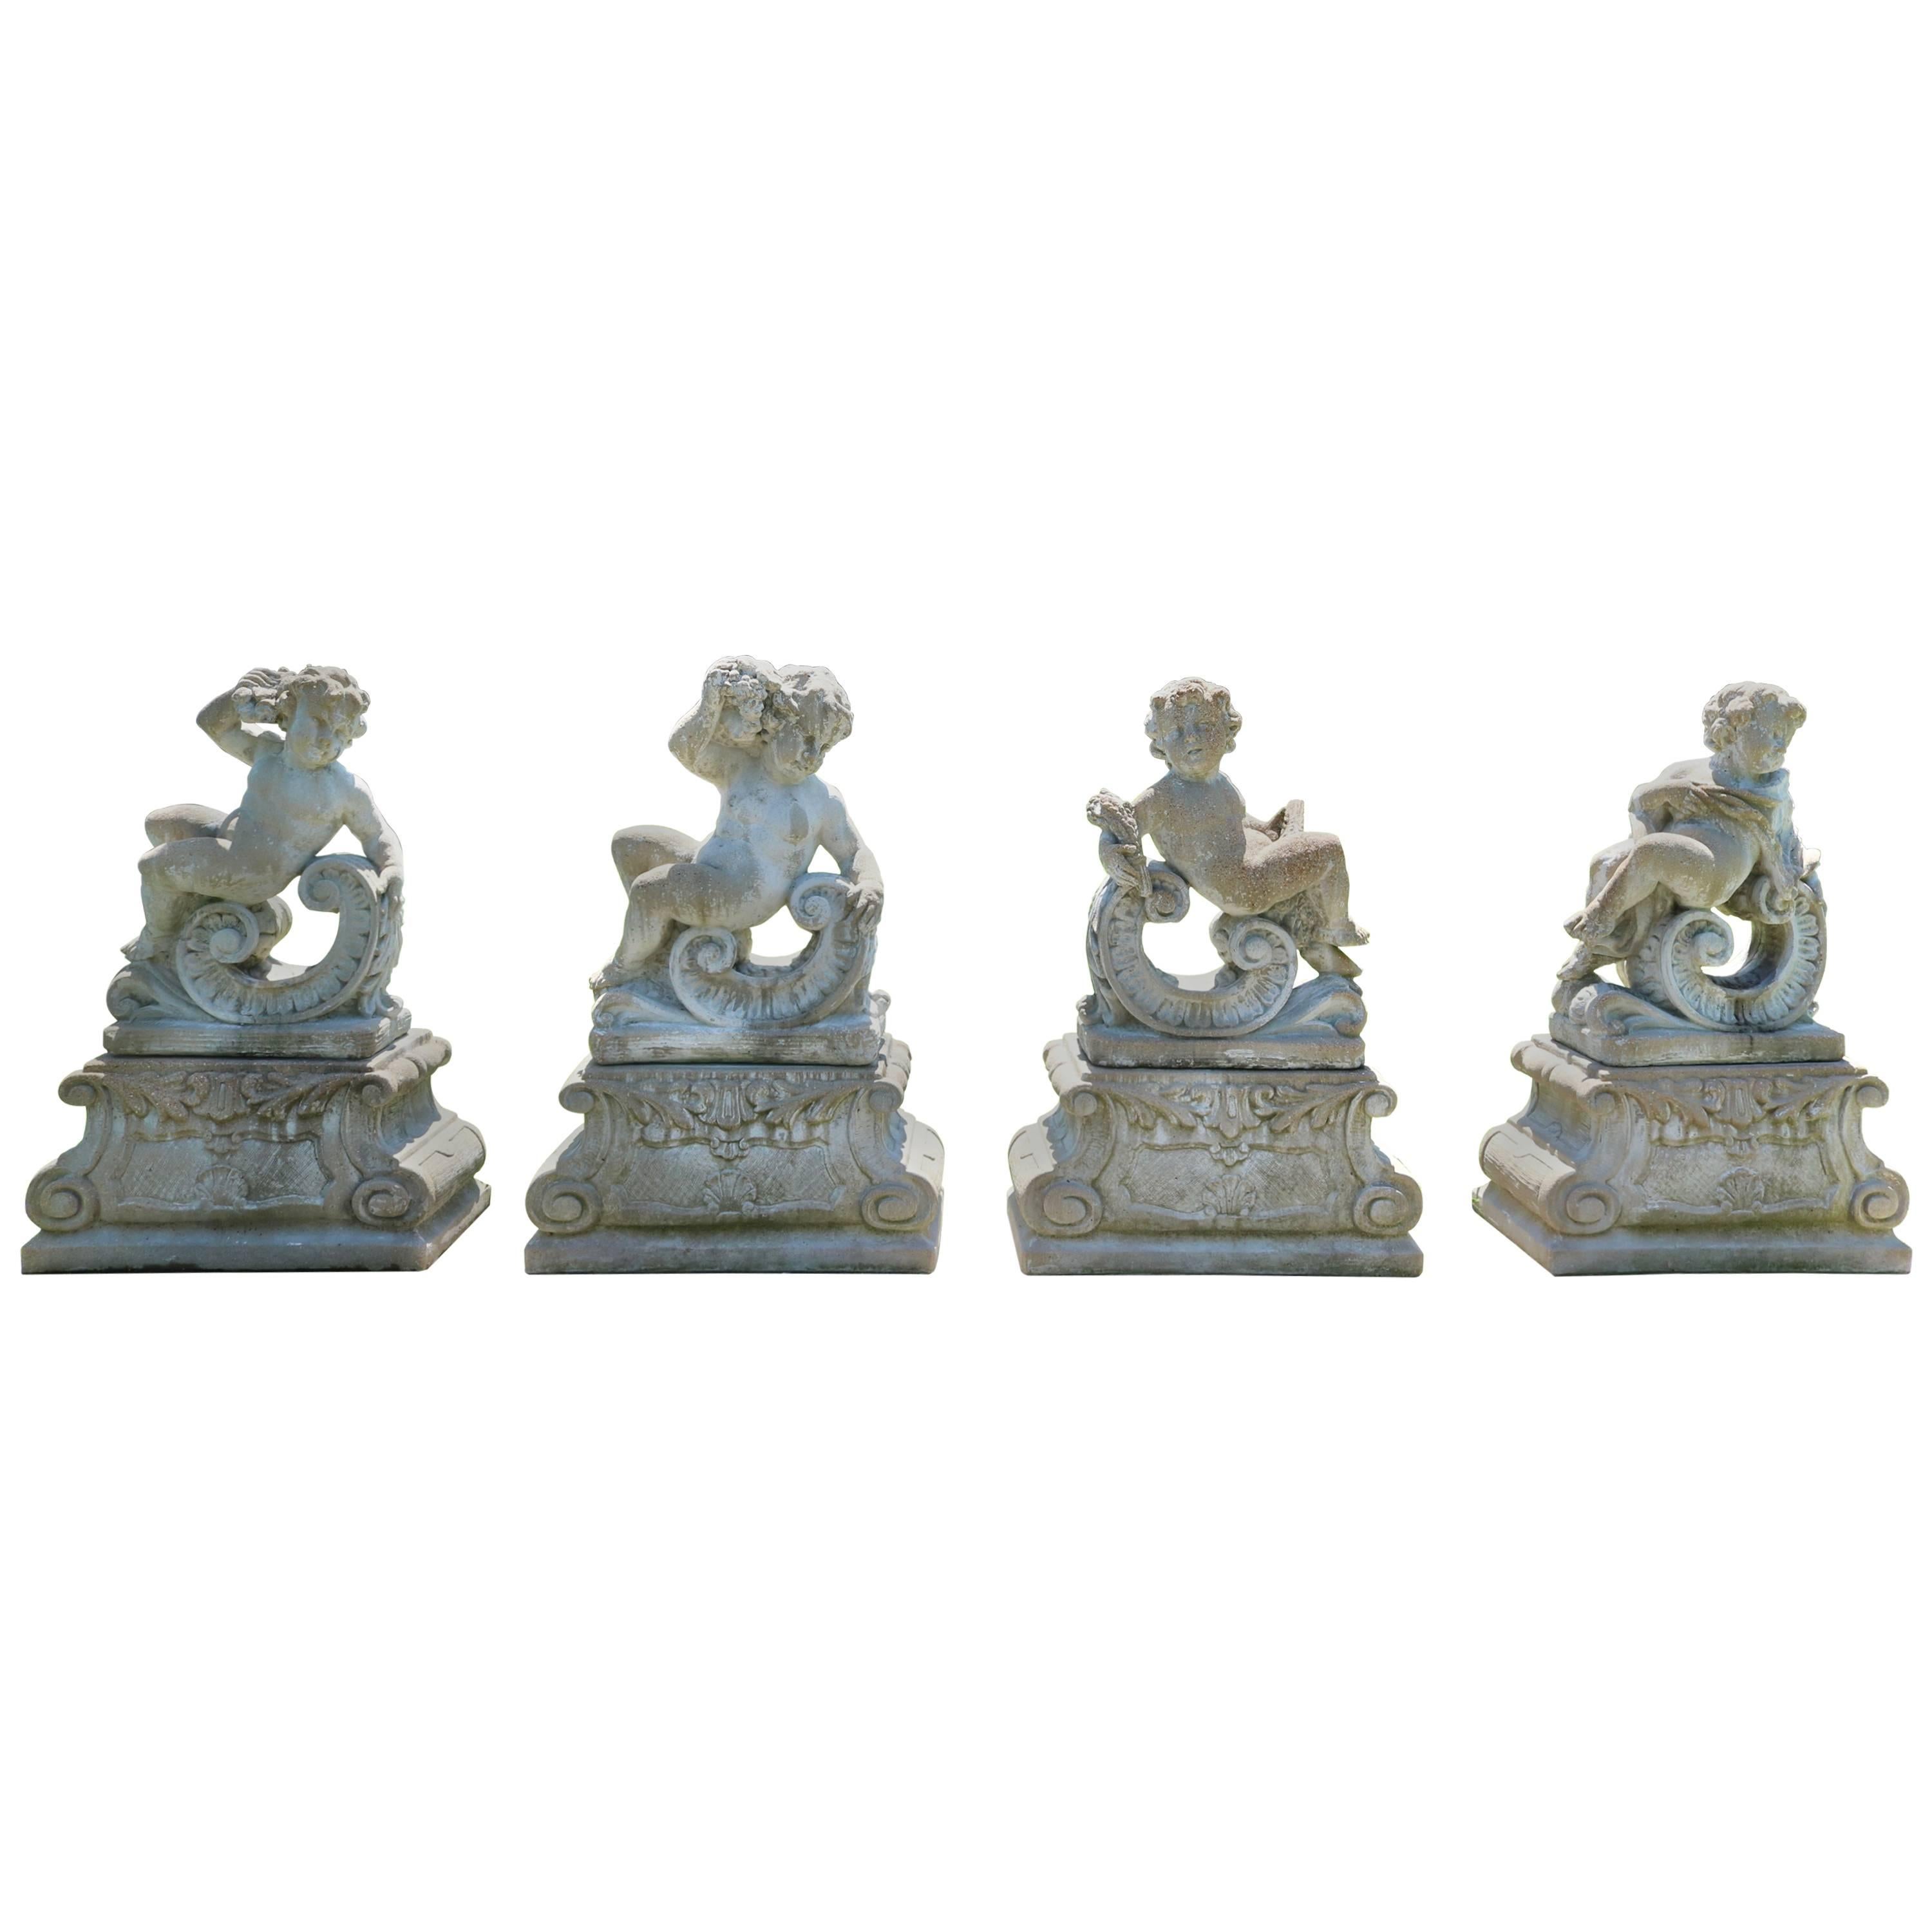  Louis XV Style Concrete Garden Sculptures of the Four Seasons